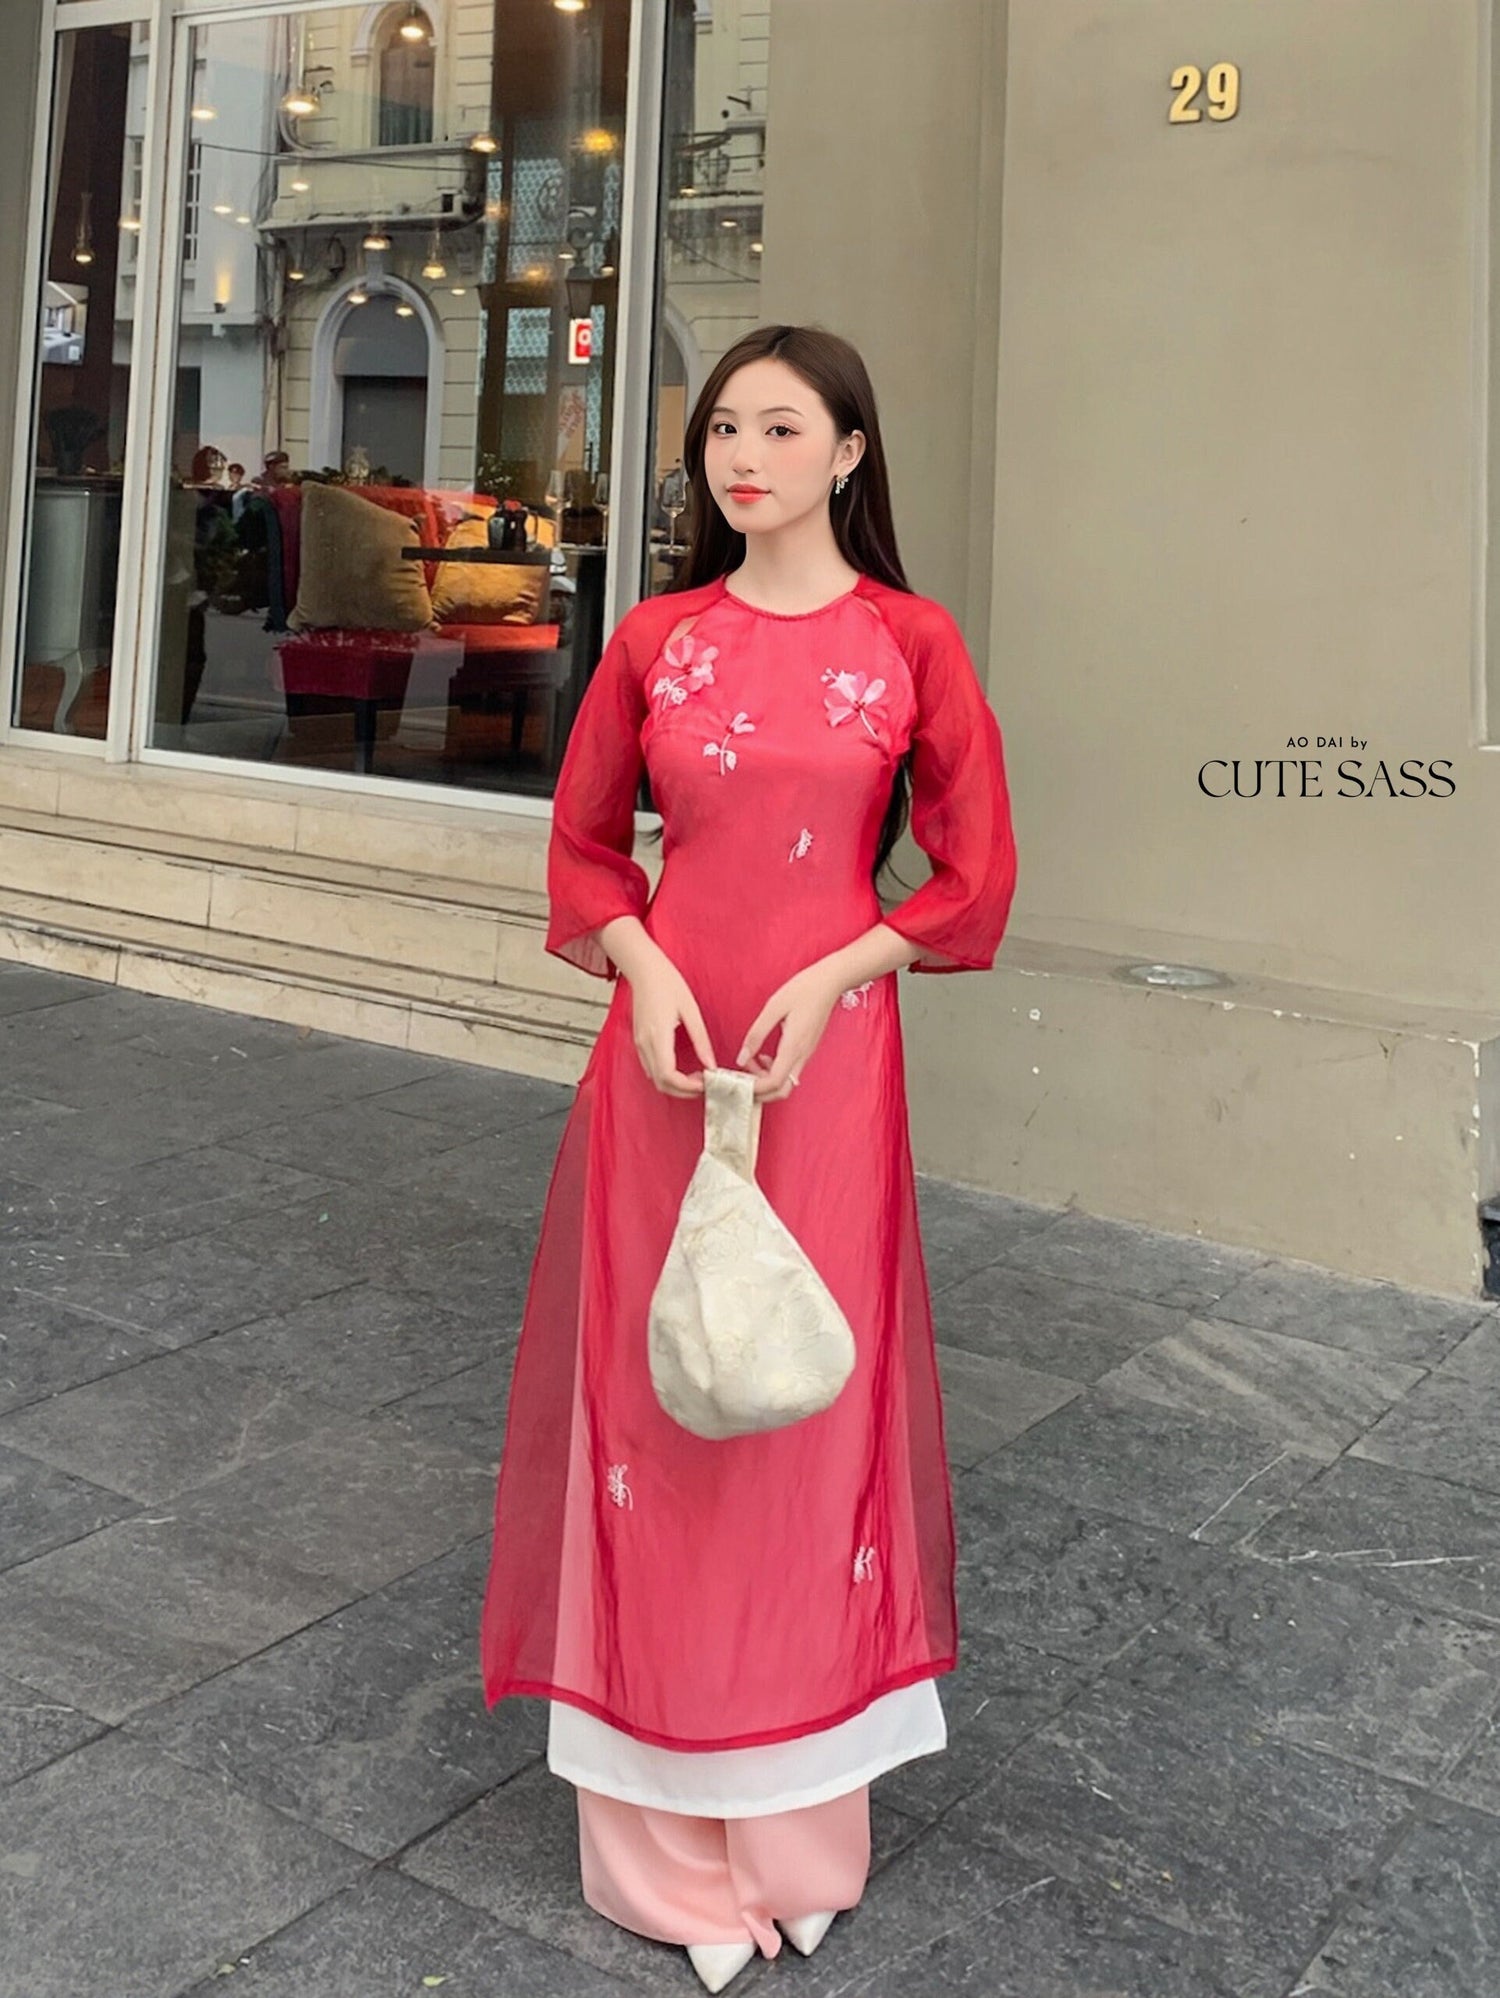 2024 ao dai classic style aodai dress full sleeve women flower printing  vietnam aodai dress elegant party dress oriental qipao